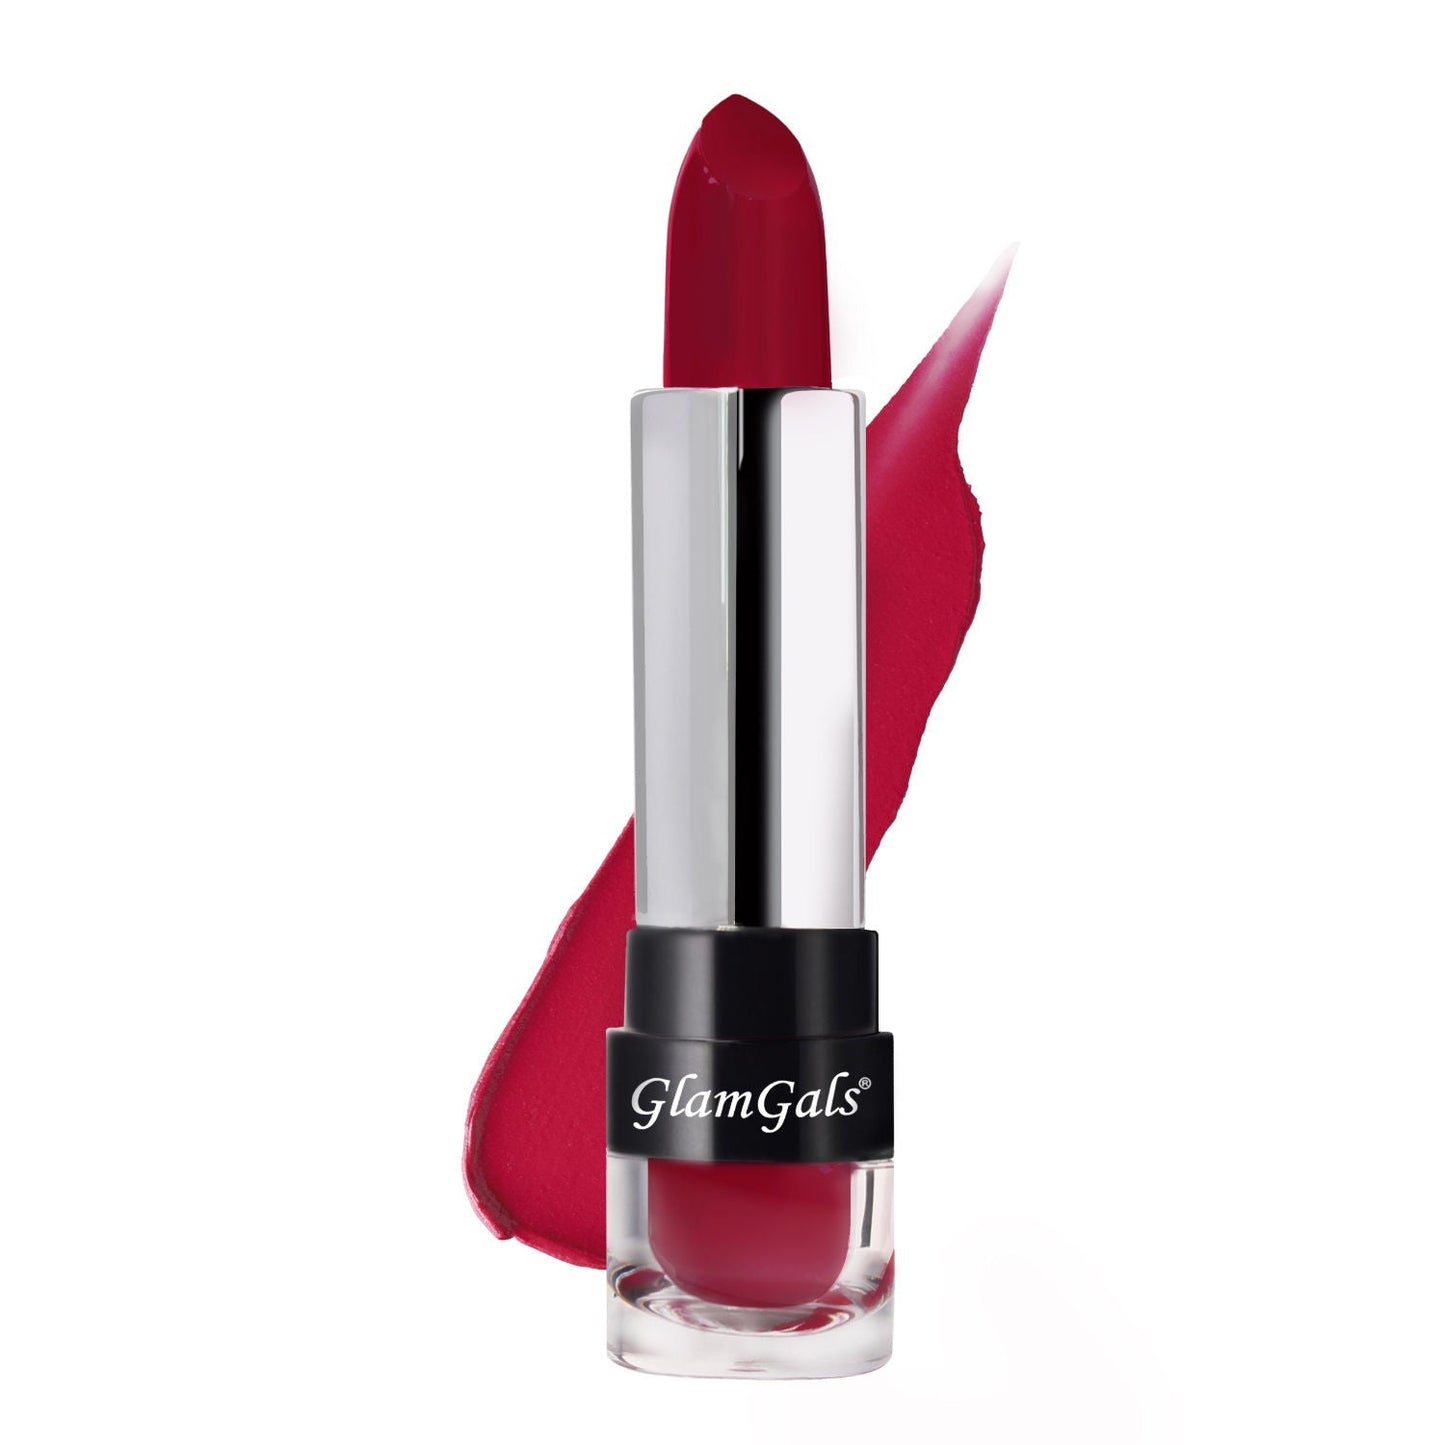 Glamgals Hollywood-U.S.A Matte Finish Kiss Proof Lipstick-Very Plum - BUDNE